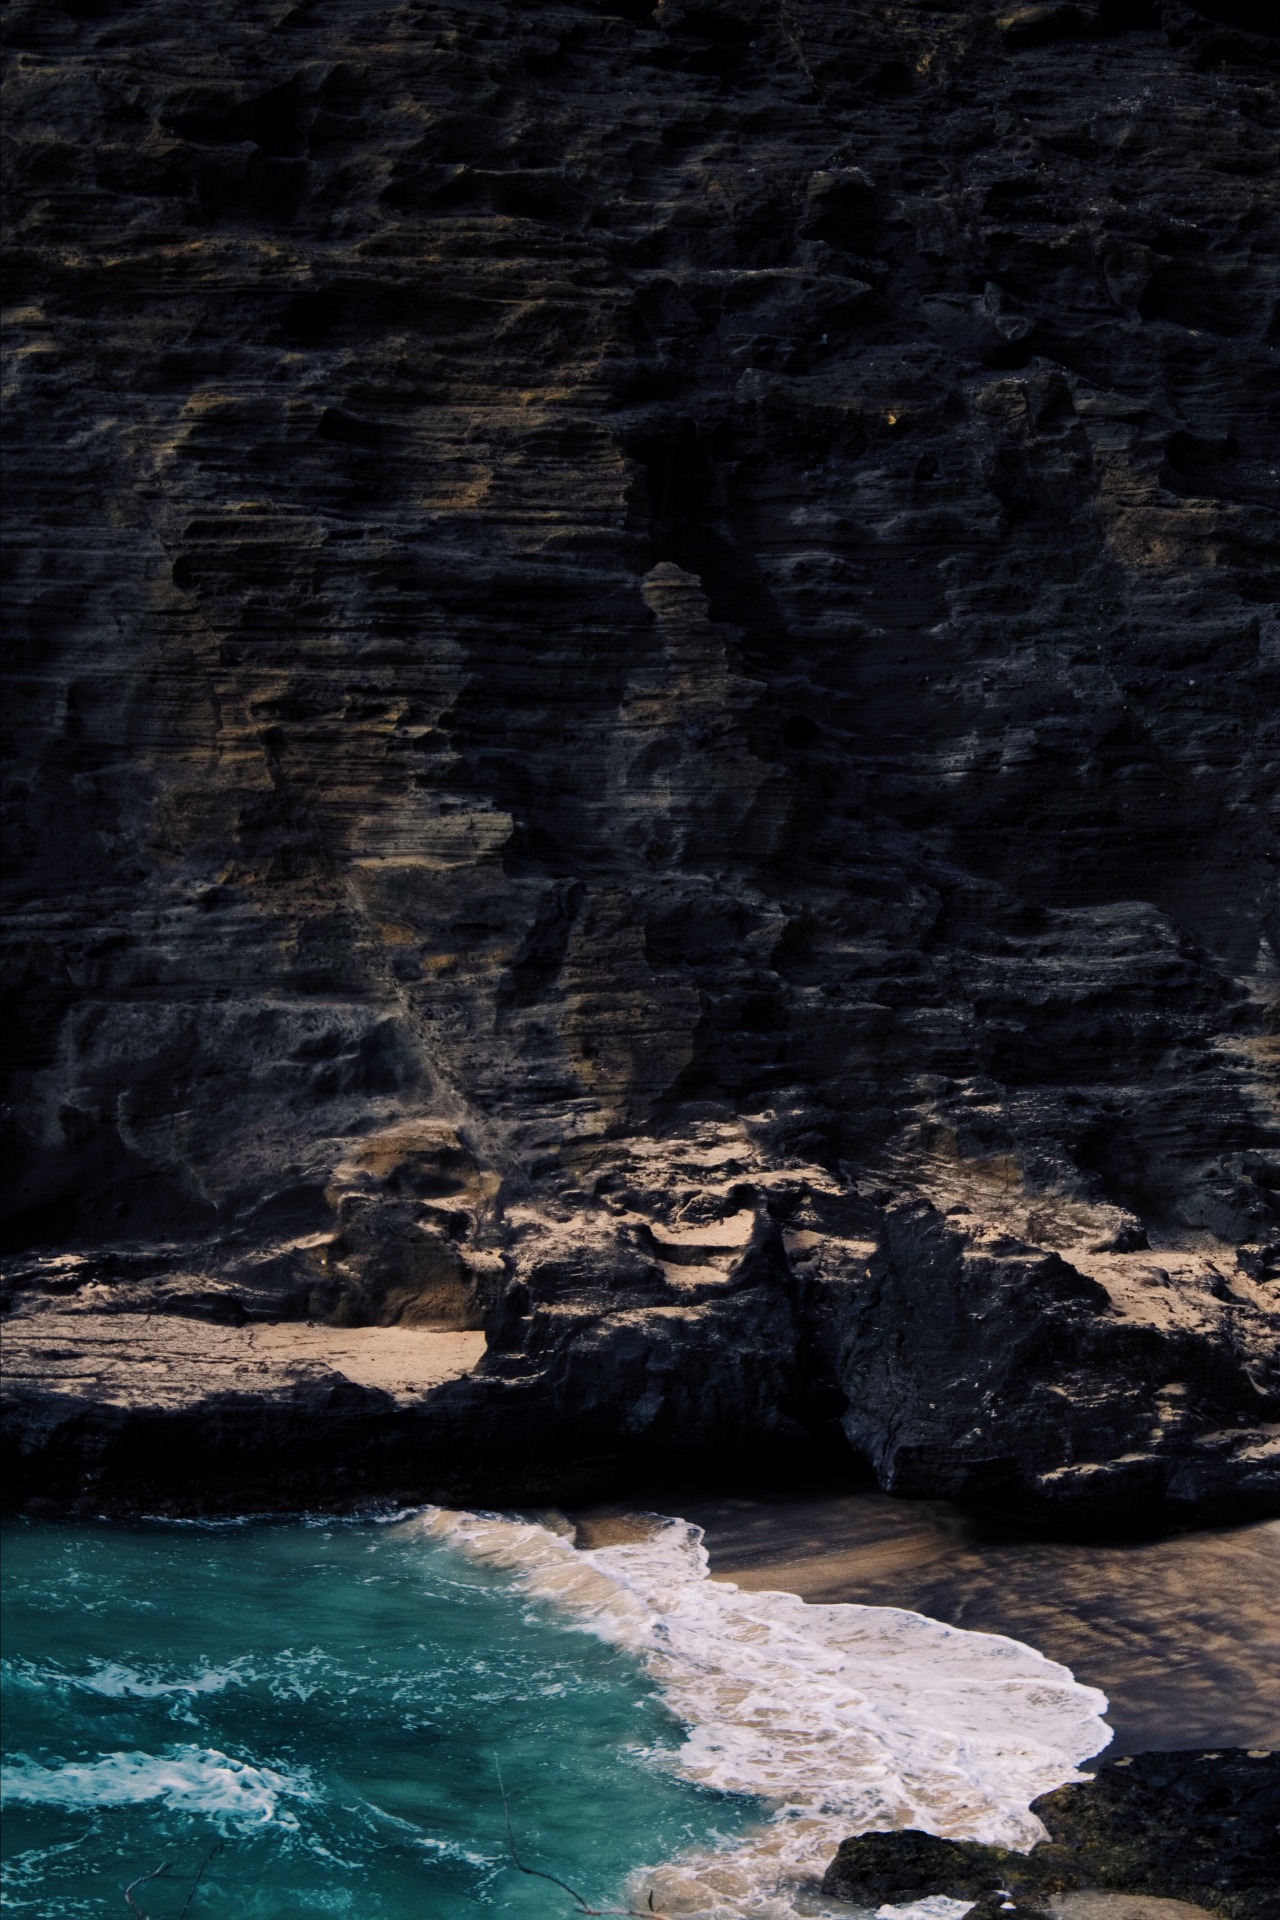 avenuesofinspiration:
““Hidden Cove | Photographer © | AOI” ”
❤